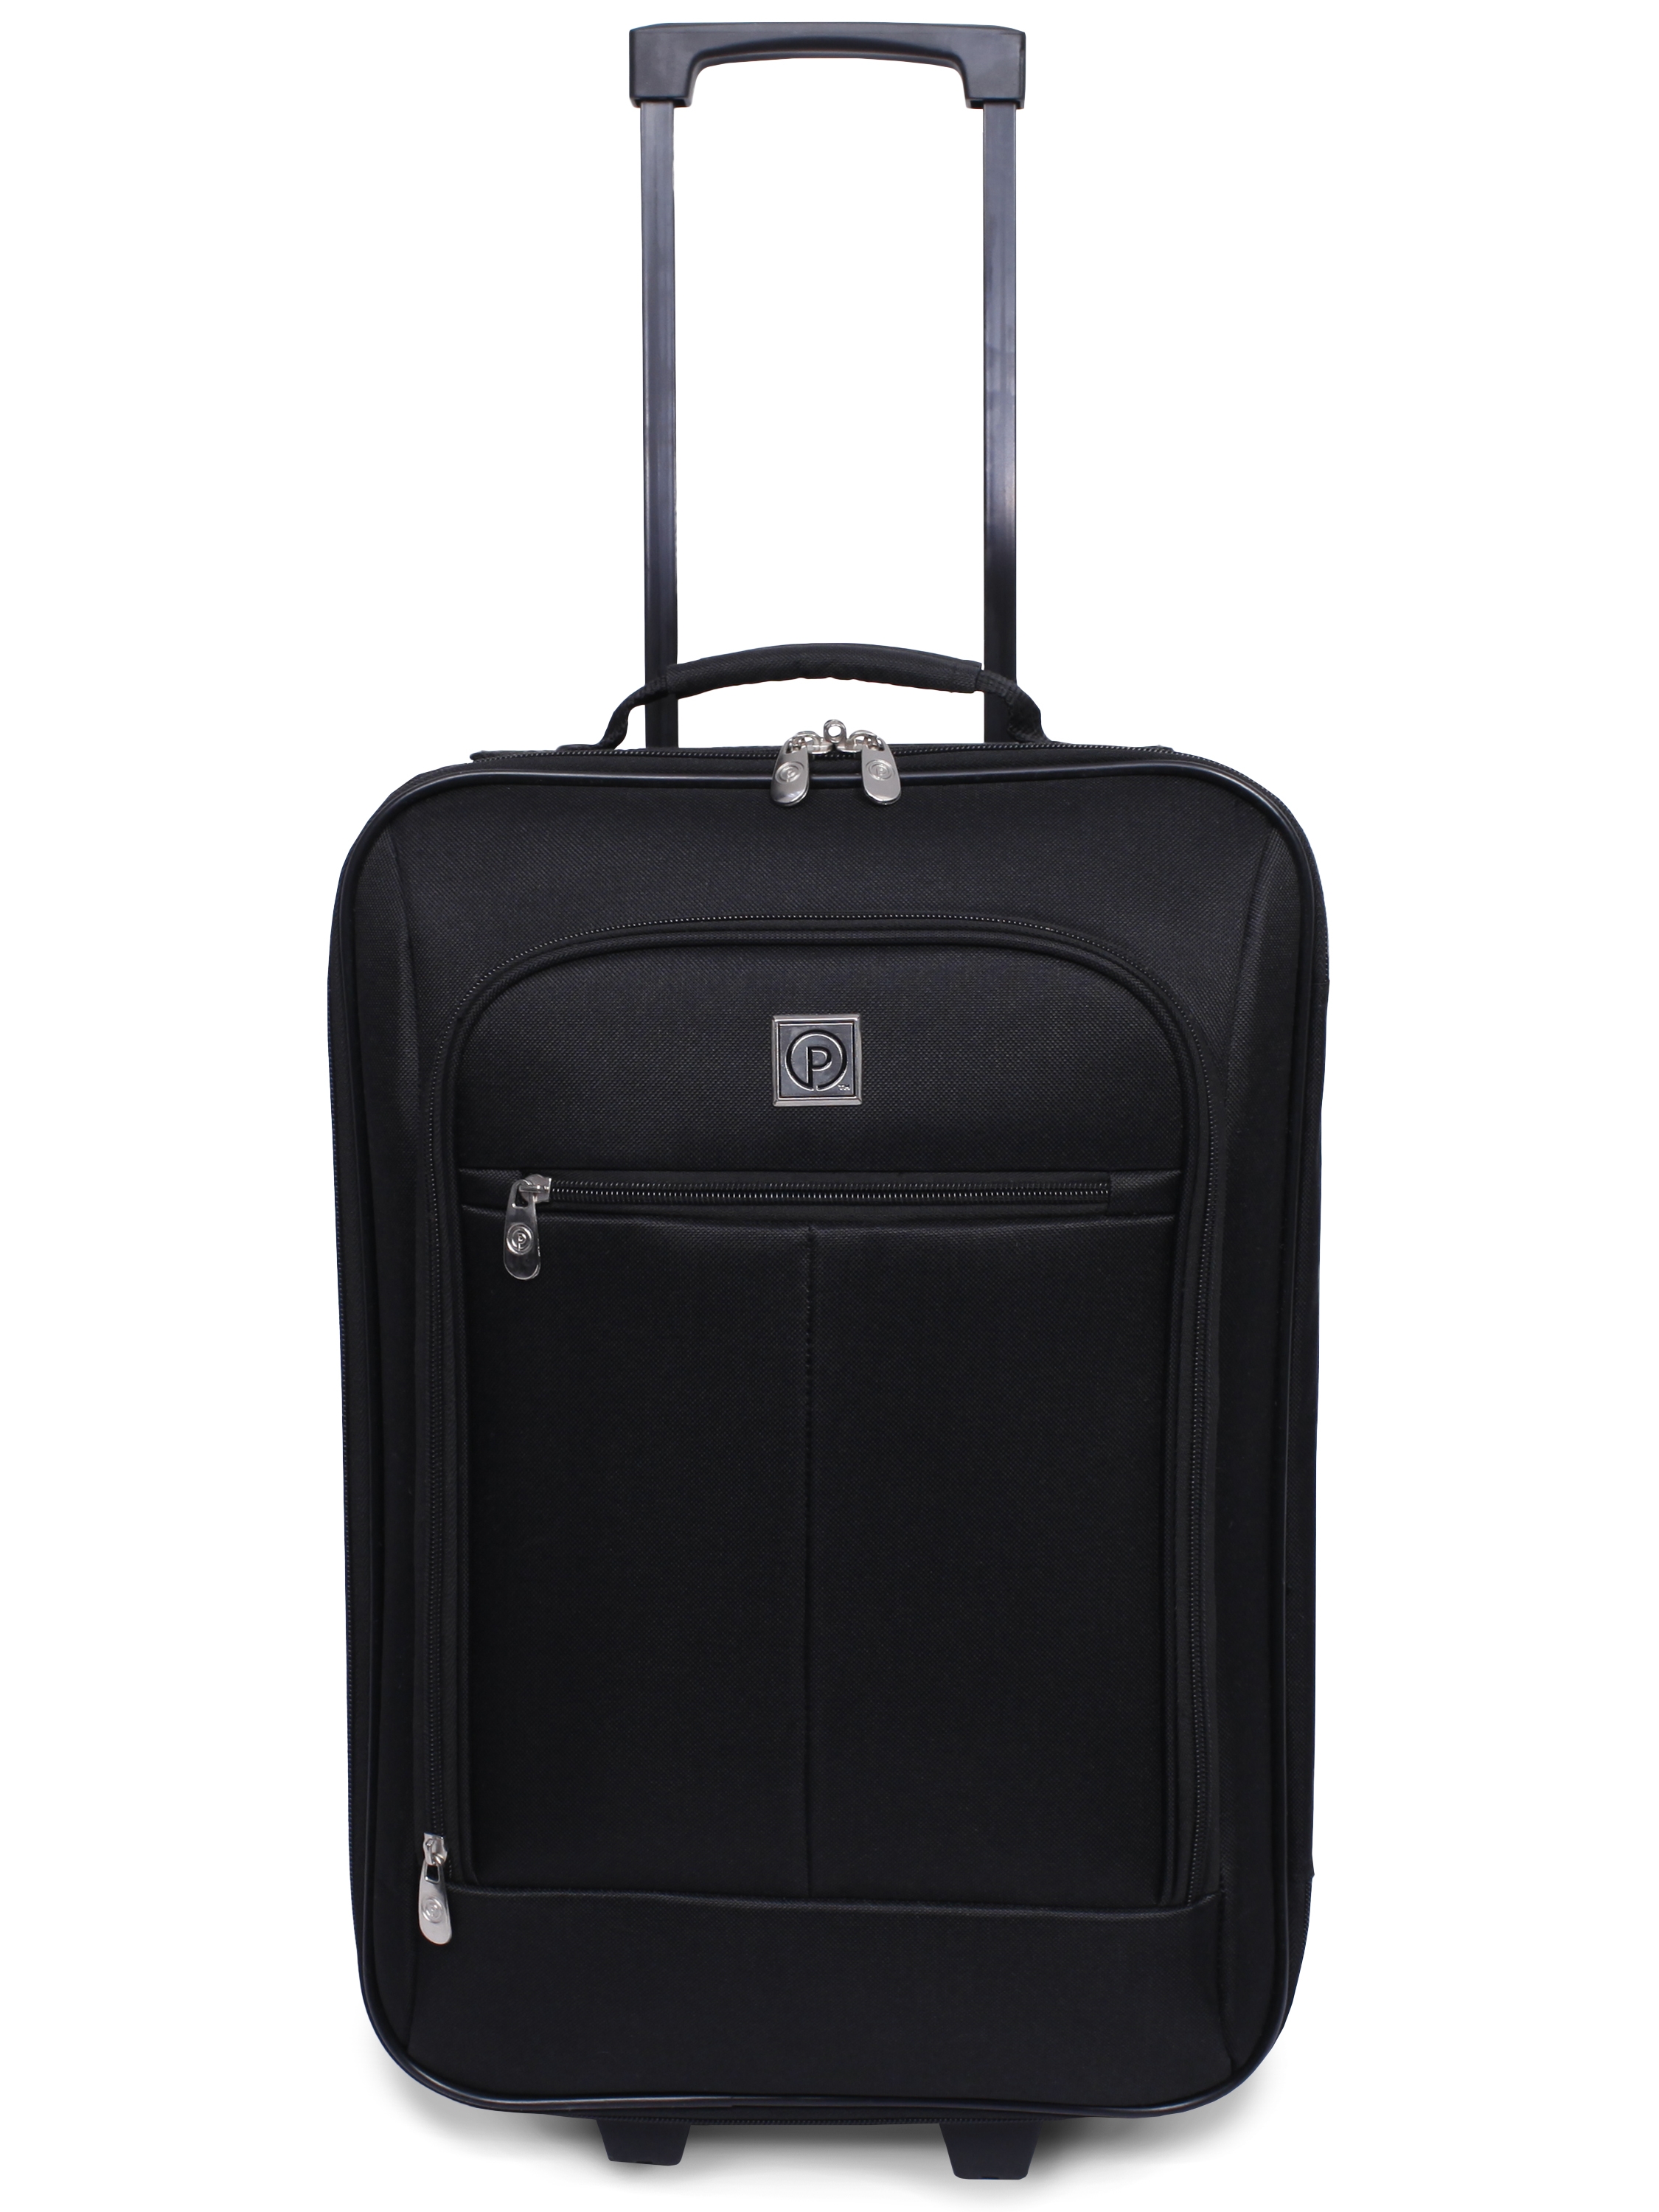 Protege Pilot Case 18" Softside Carry-on Luggage, Black - image 1 of 10